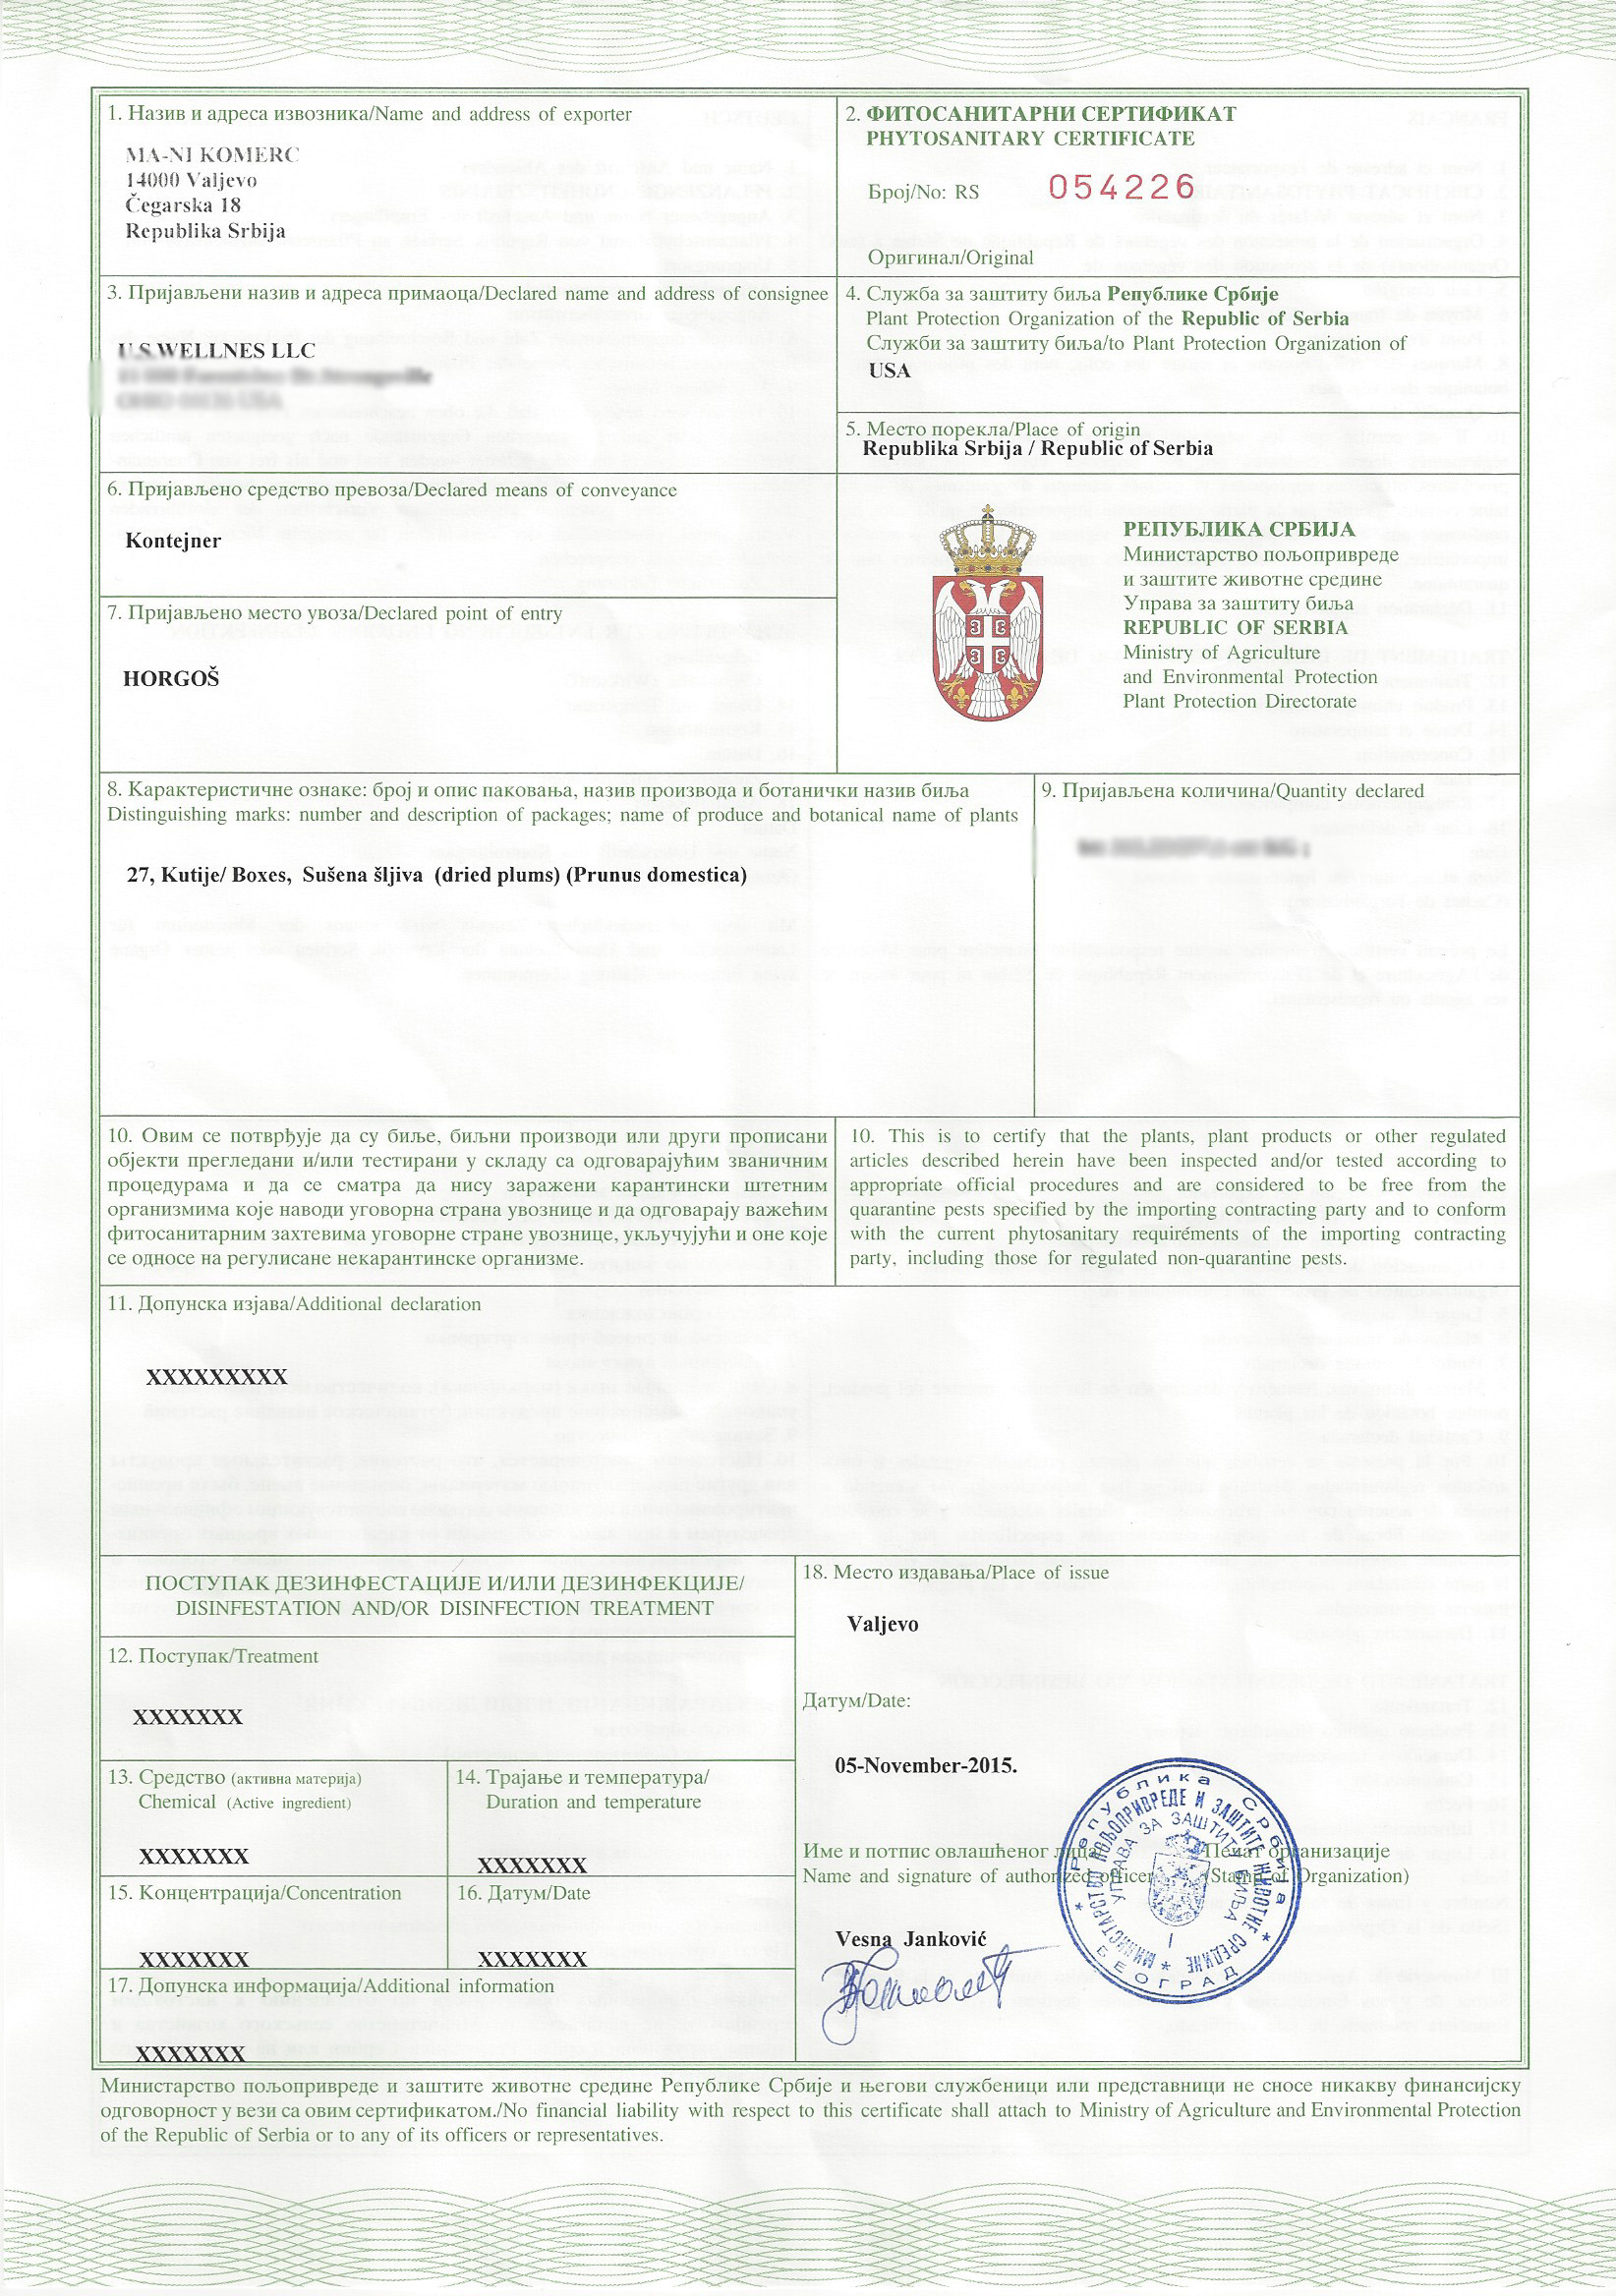 Phytosanitary certificate fro Serbian Prunes